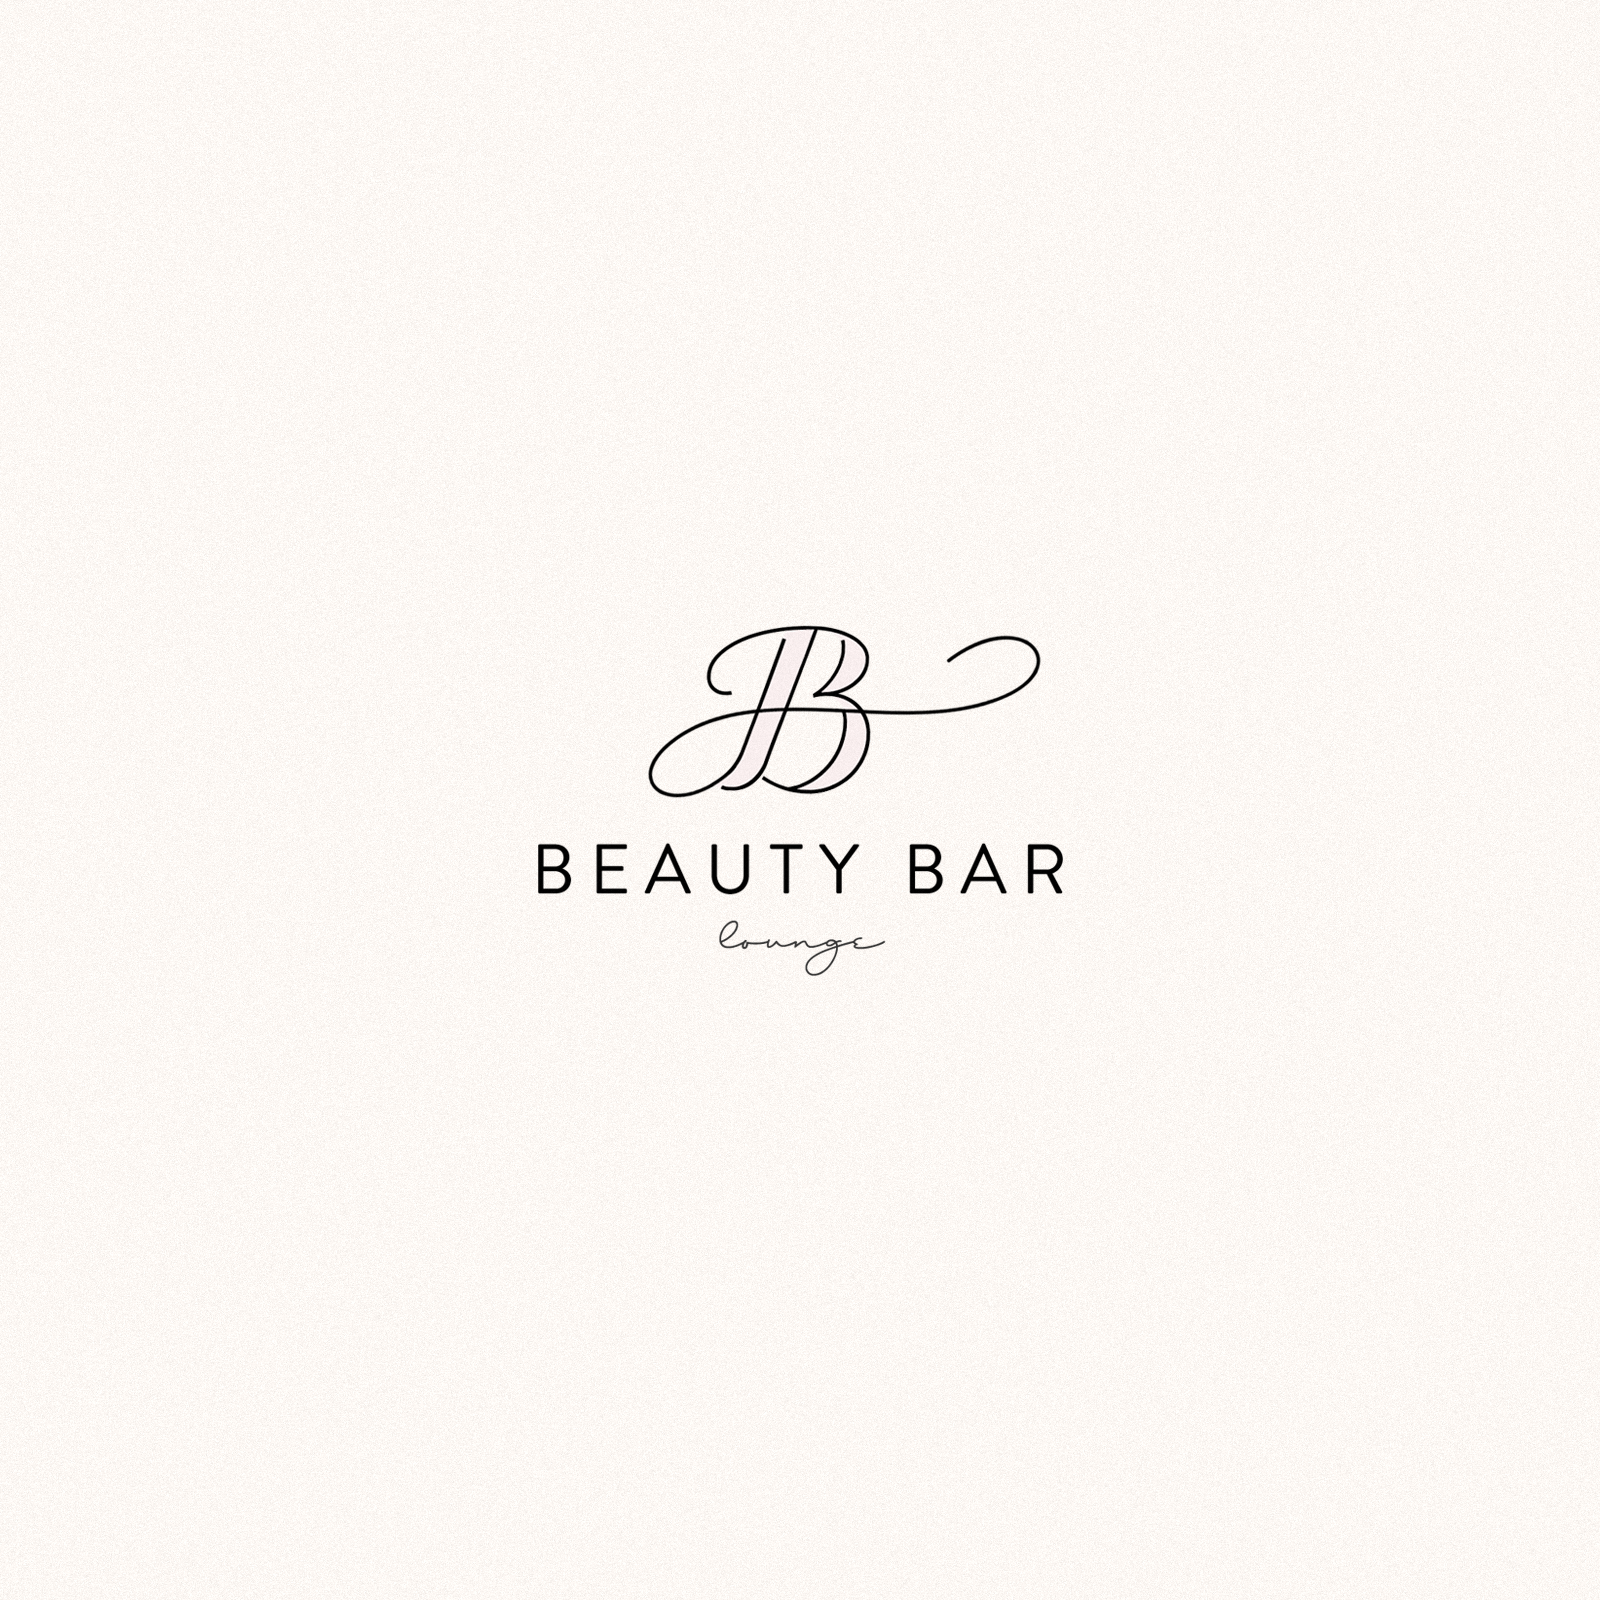 15 beauty Bar logo ideas